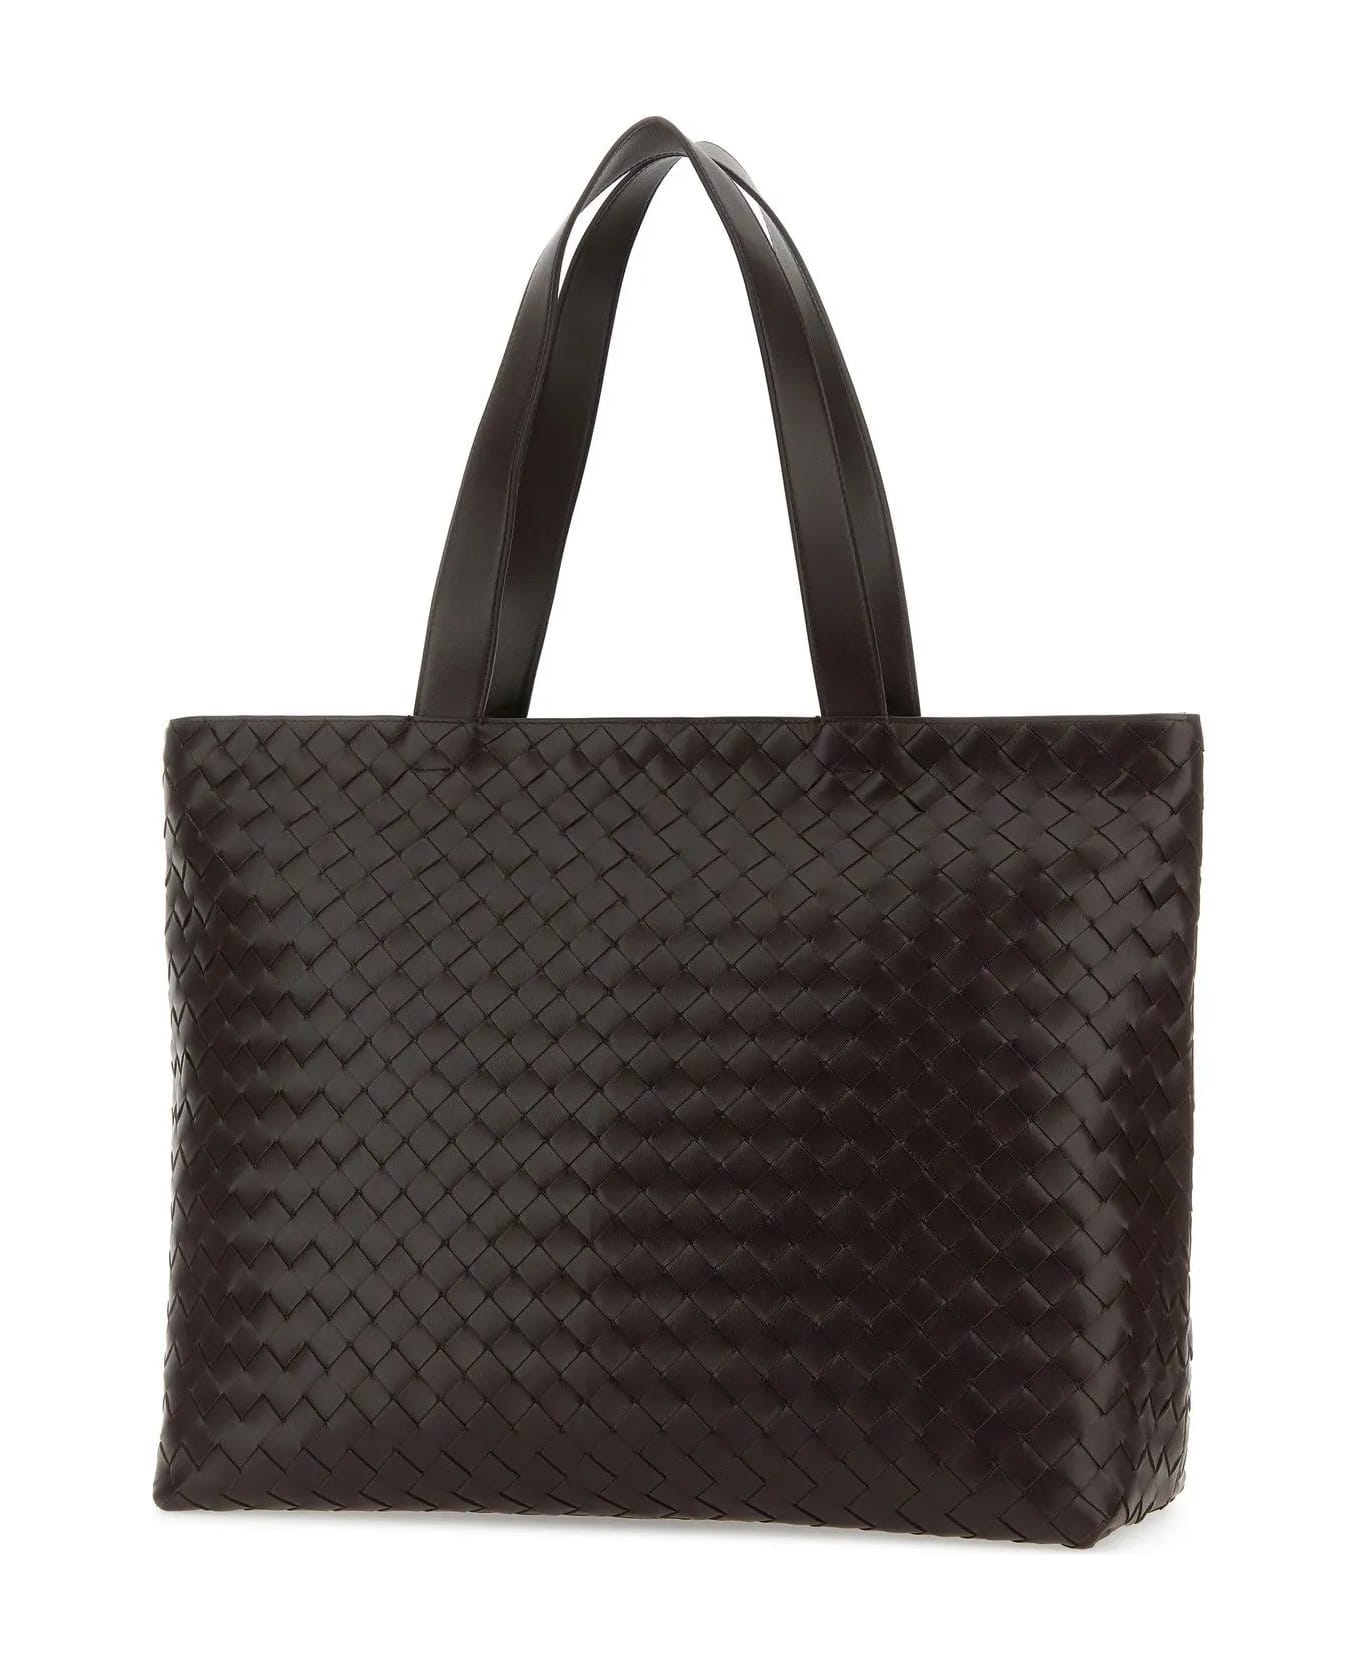 Bottega Veneta Dark Brown Leather Intrecciato Shopping Bag - Fondant/silver